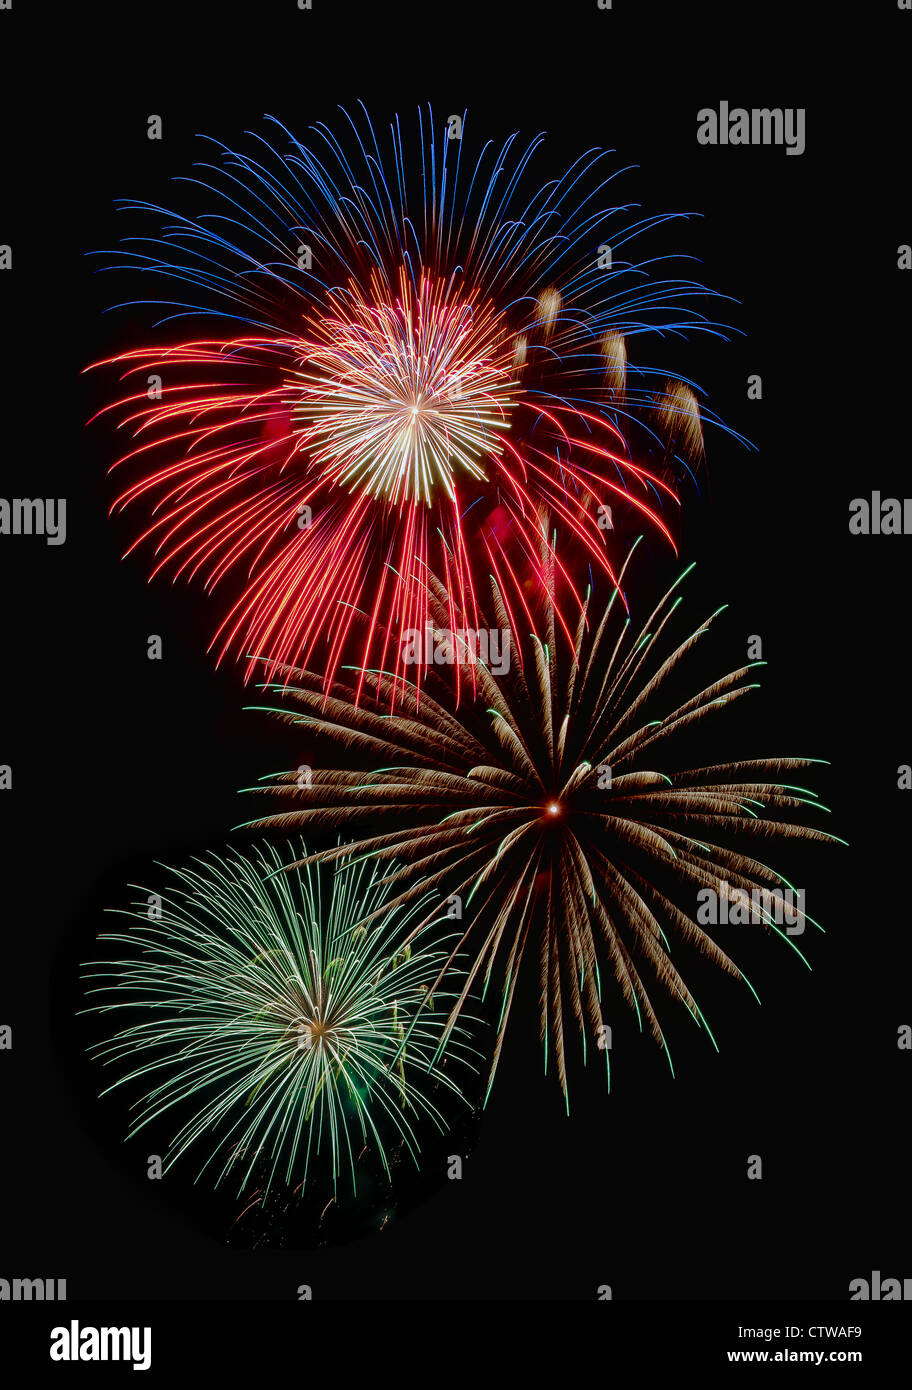 Fireworks celebration display Stock Photo